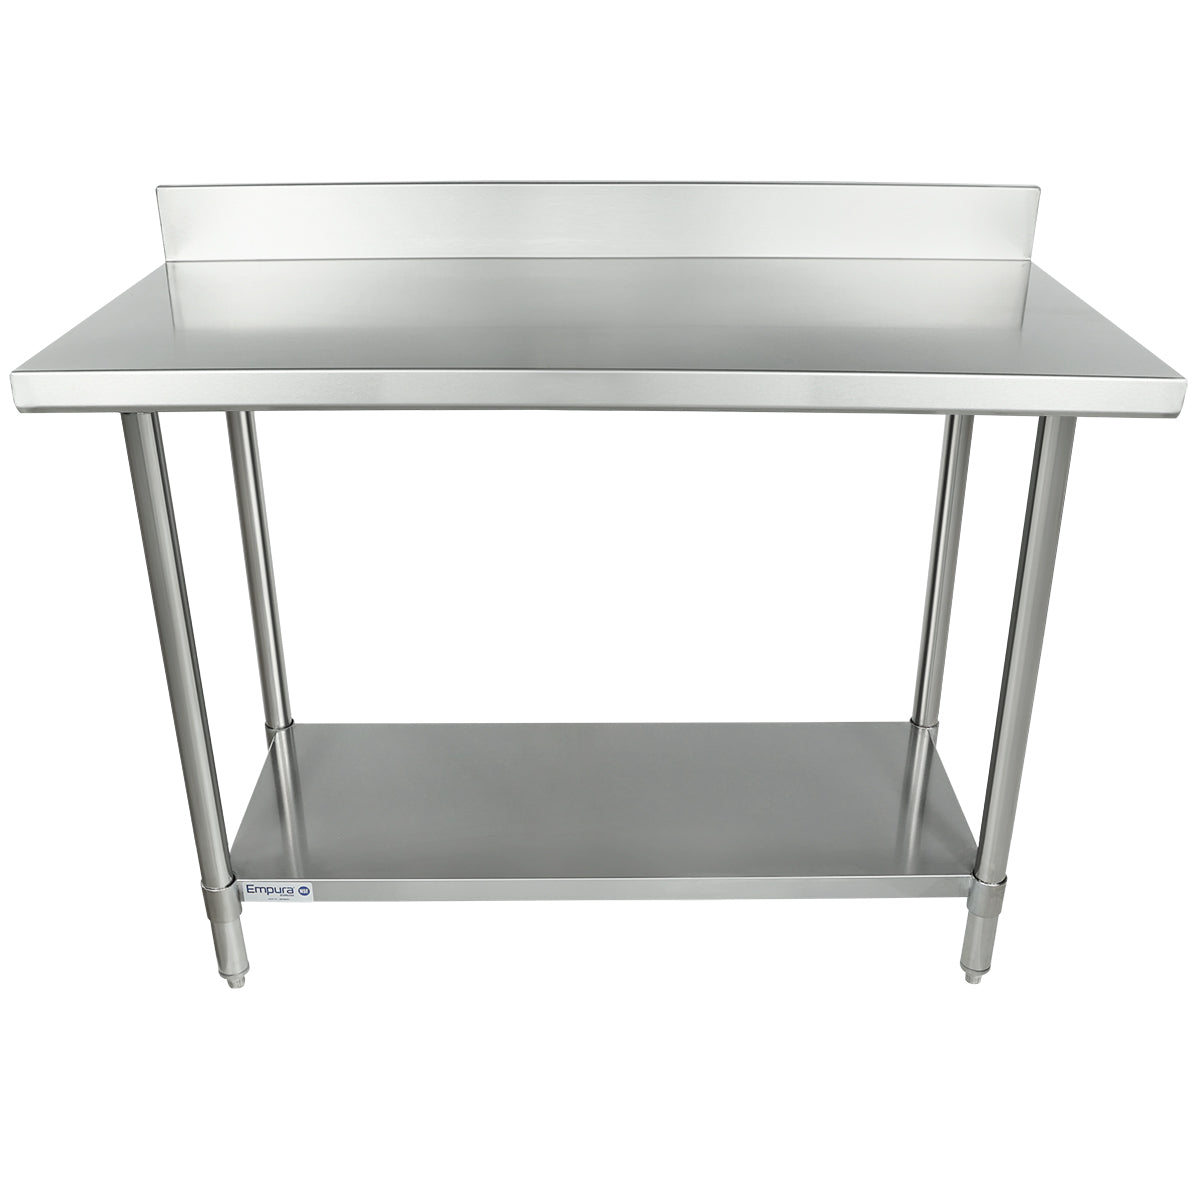 Empura 48" x 24" 16-Gauge 304 Stainless Steel Commercial Work Table with 4" Backsplash plus 430 Stainless Steel Legs and Undershelf